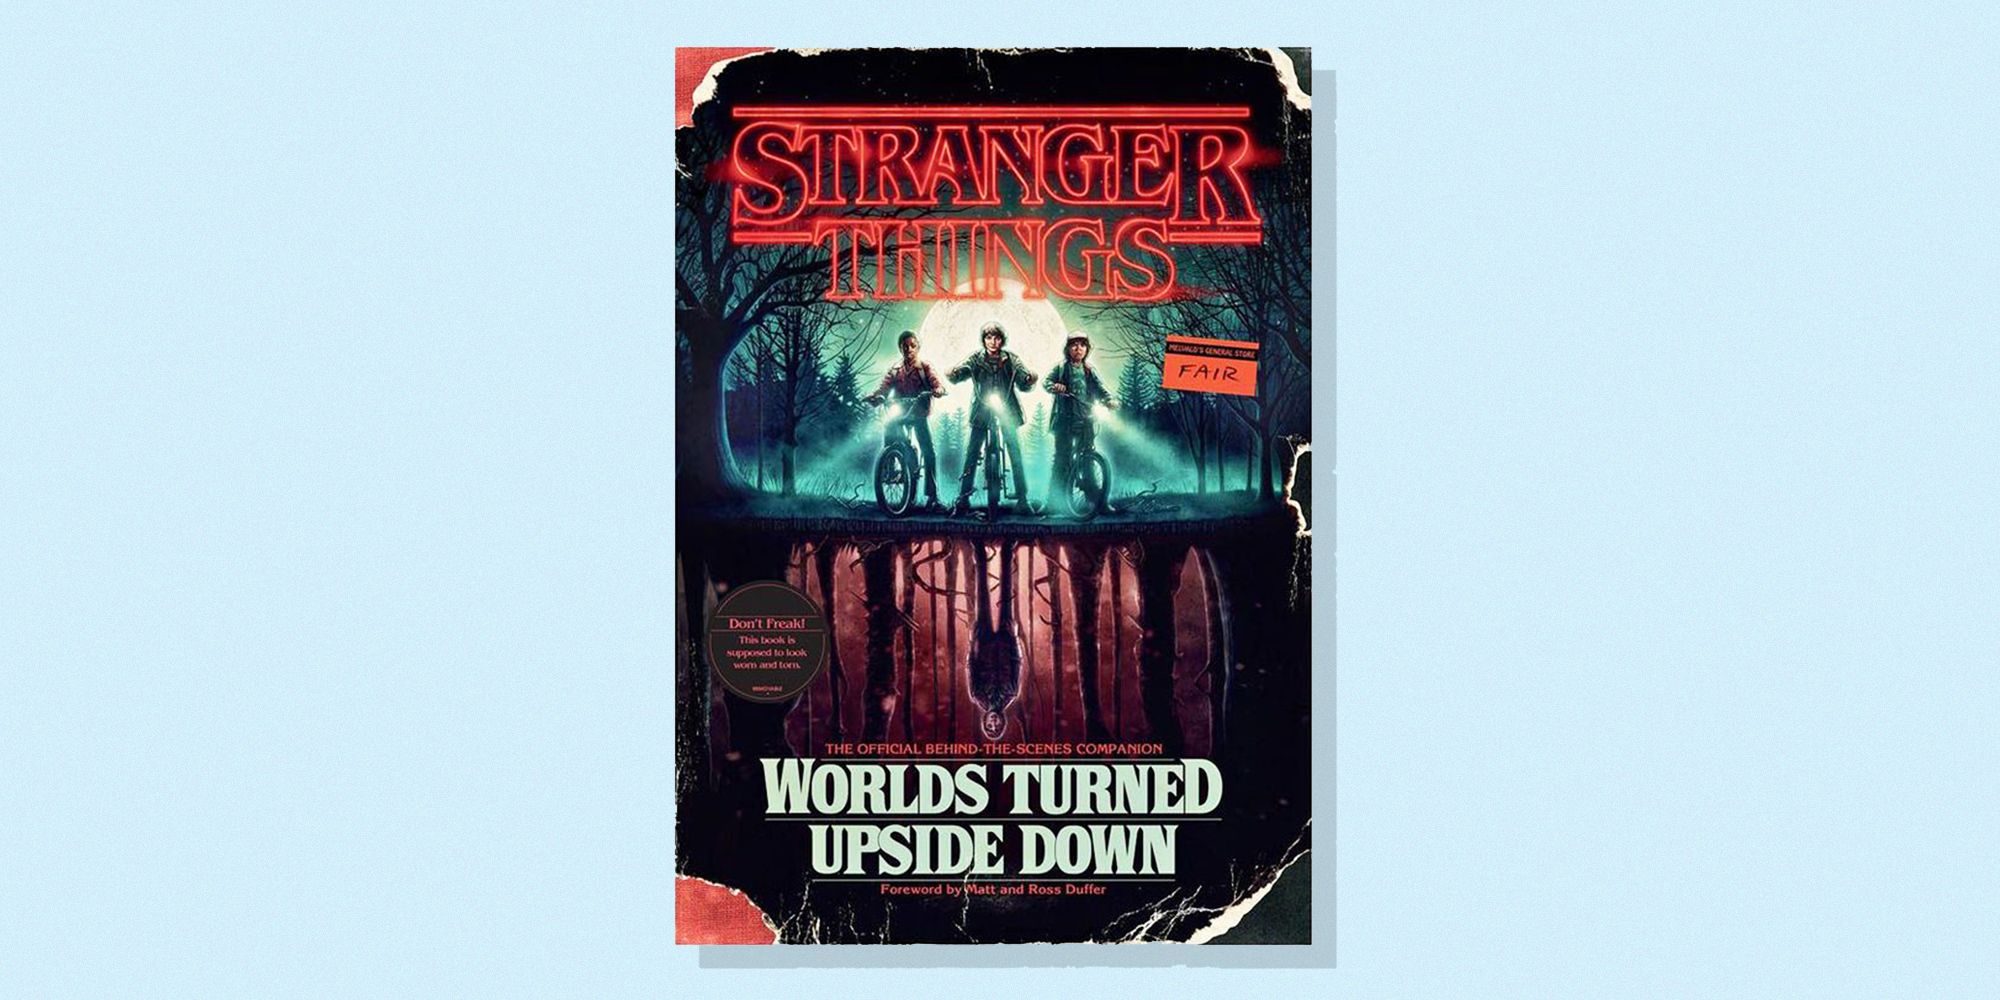 Stranger Things Gifts: The Best Merchandise for Superfans - TCK Publishing